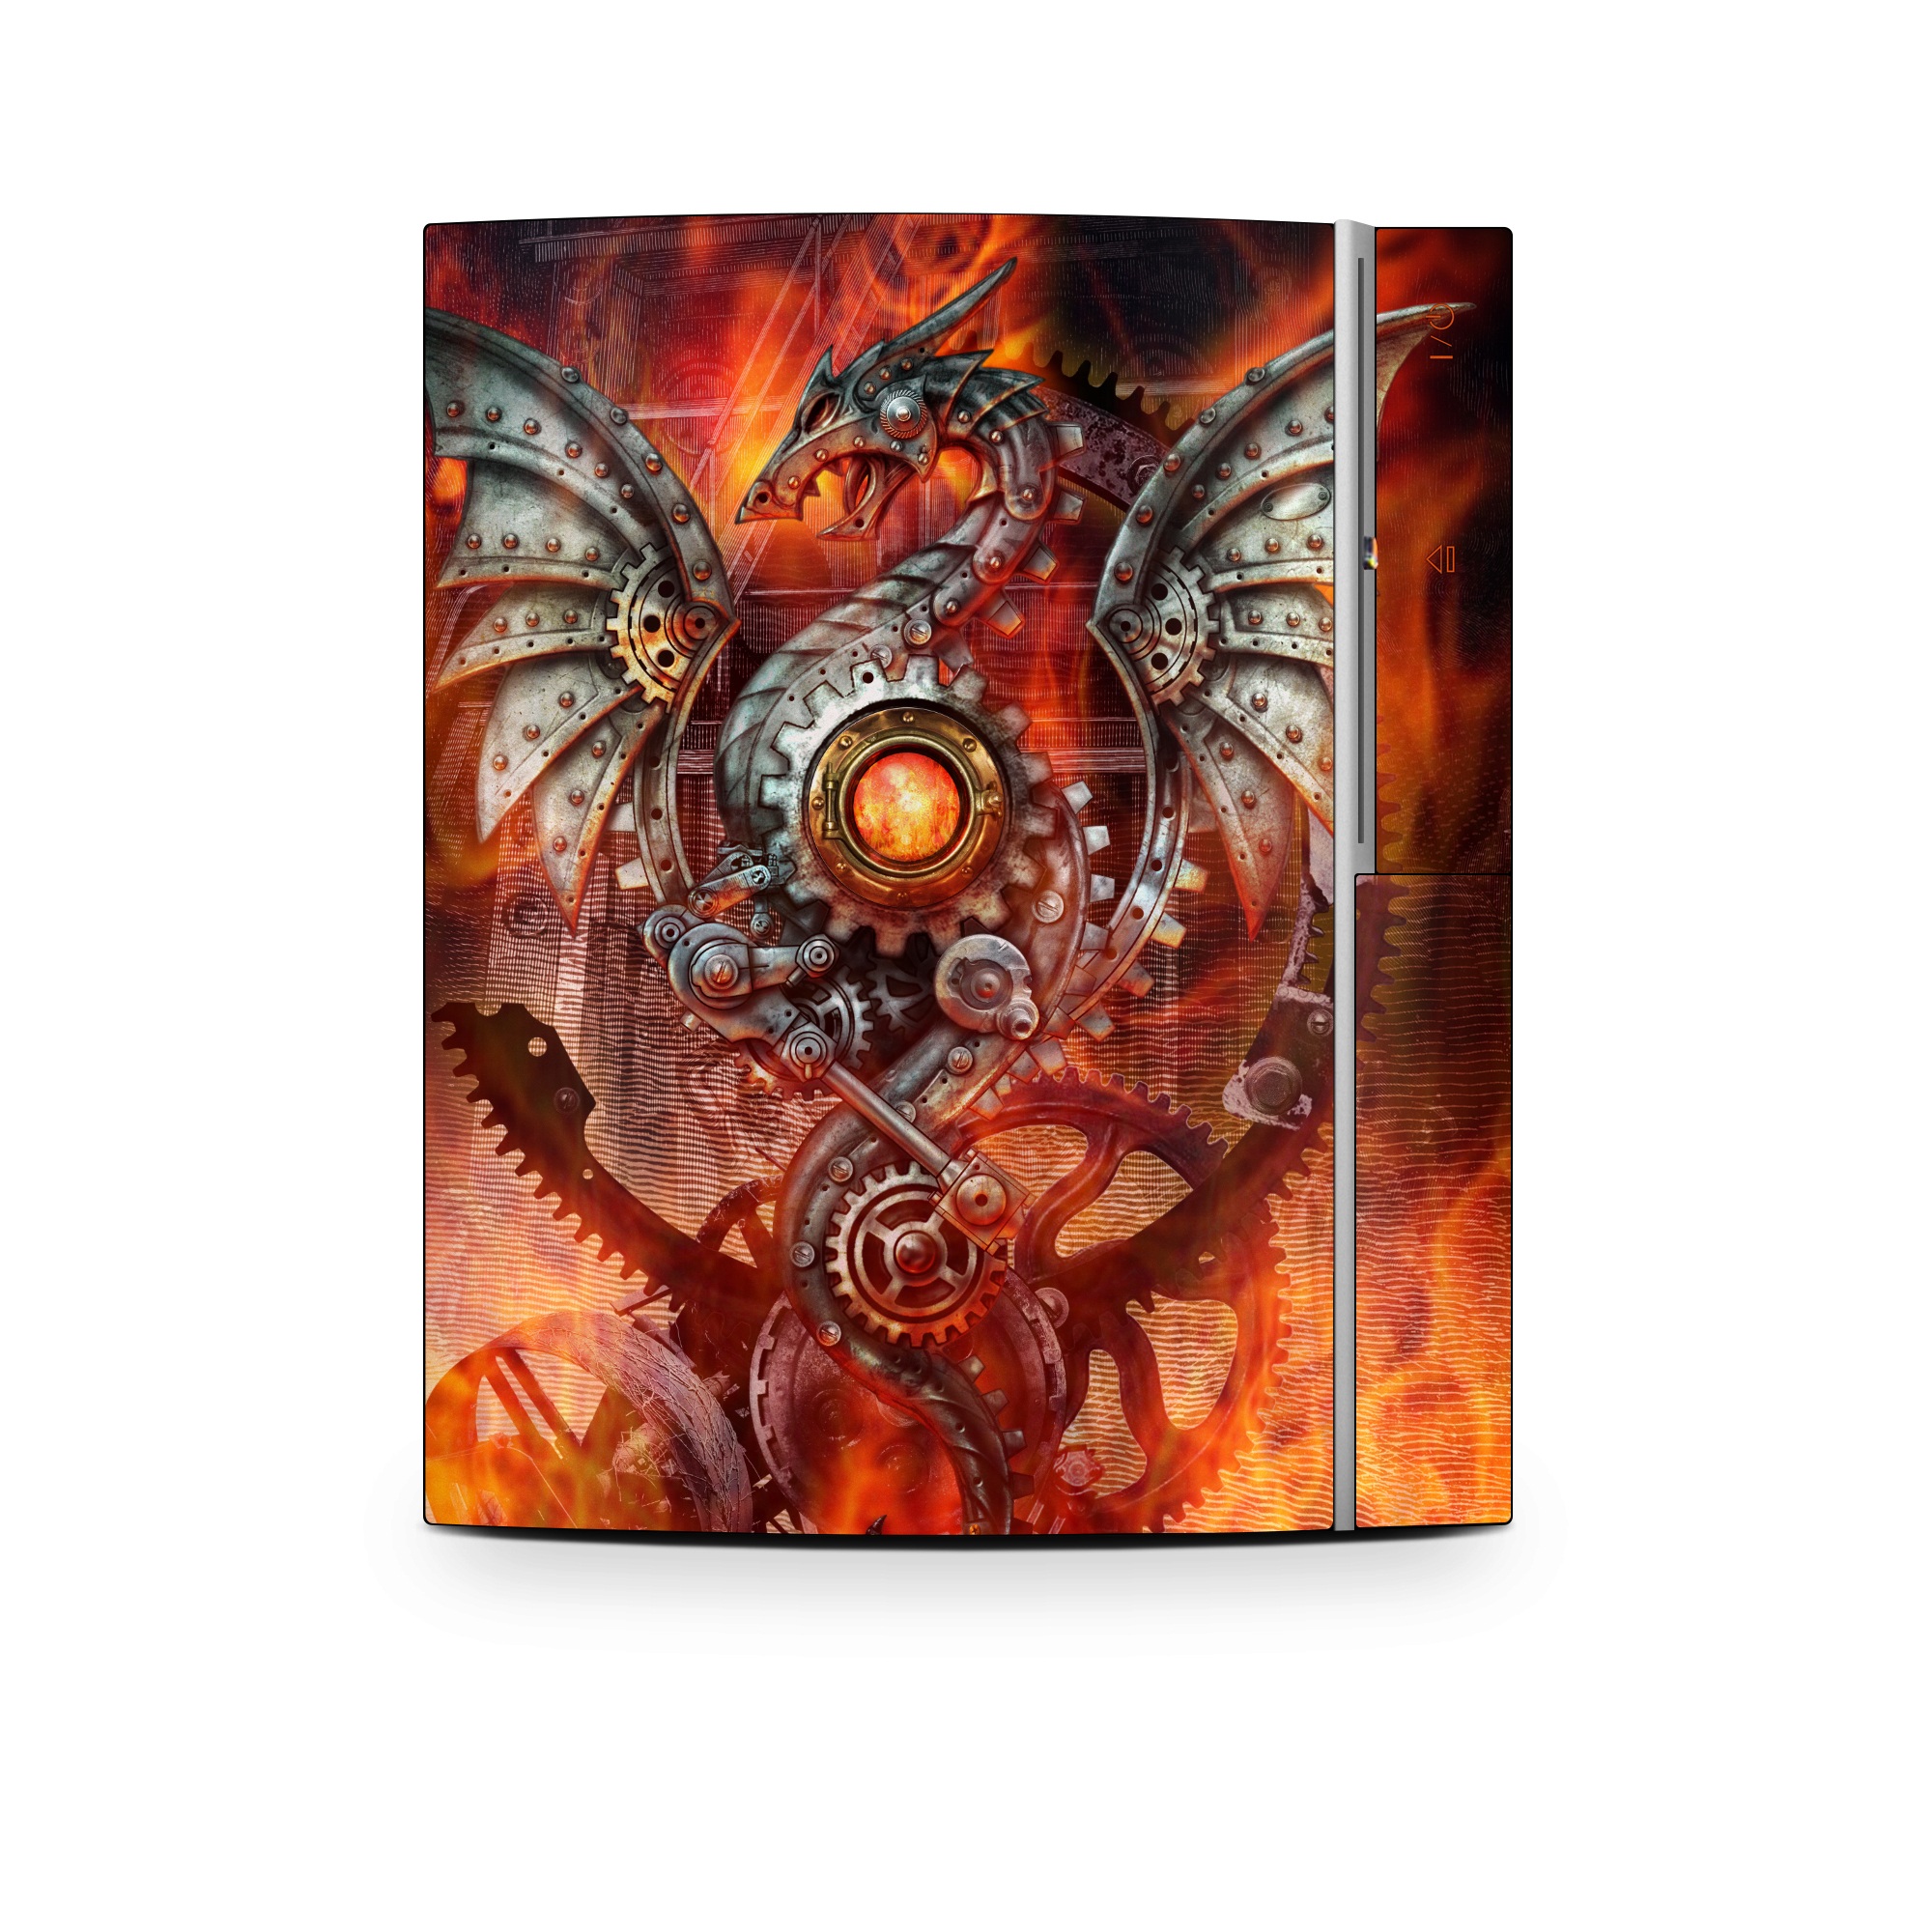 PS3 Skin - Furnace Dragon (Image 1)